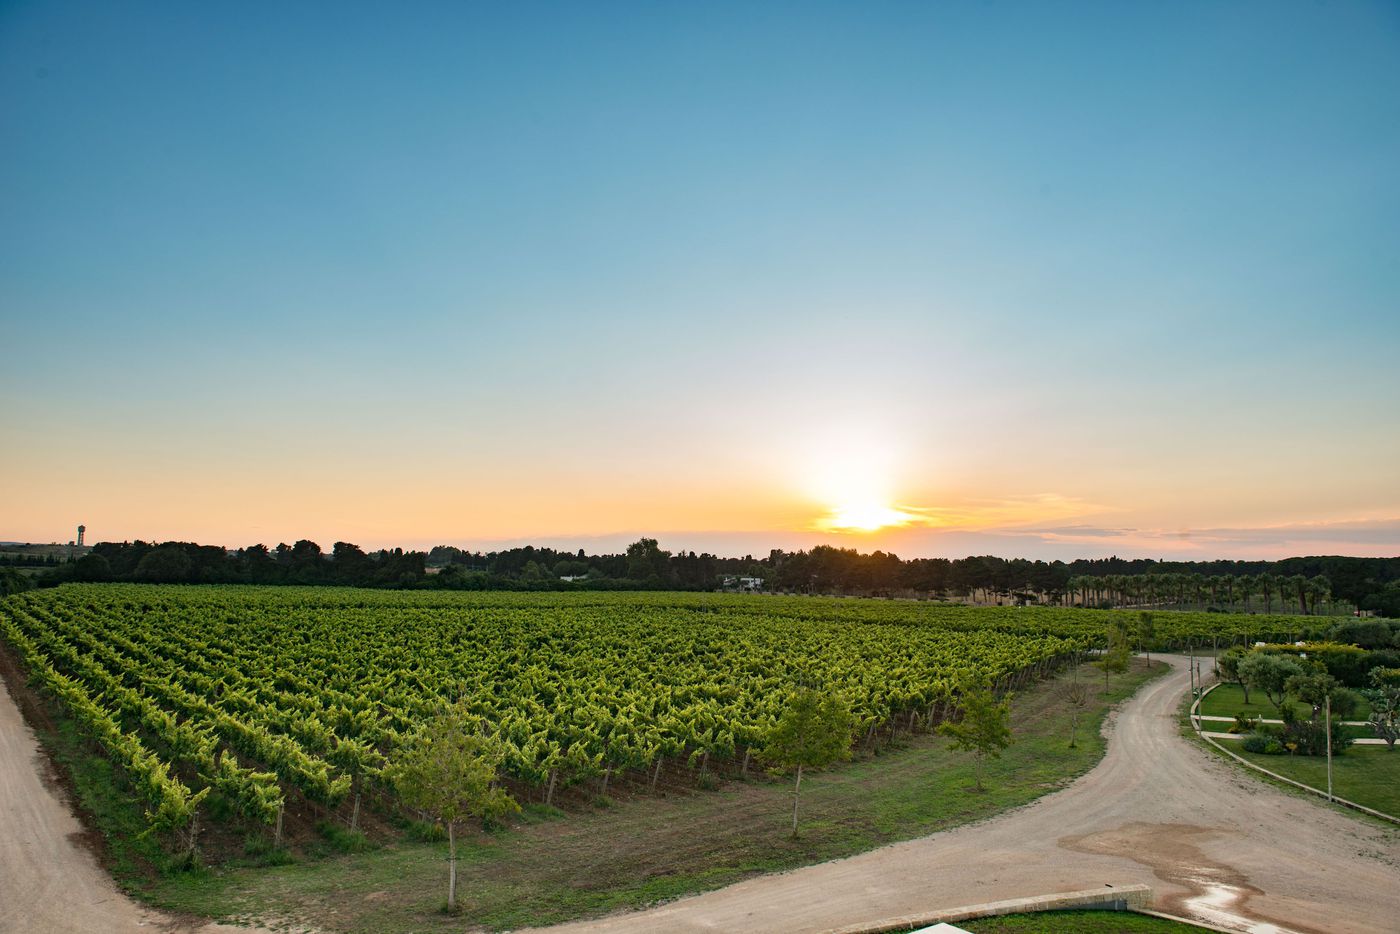 The organic vineyard